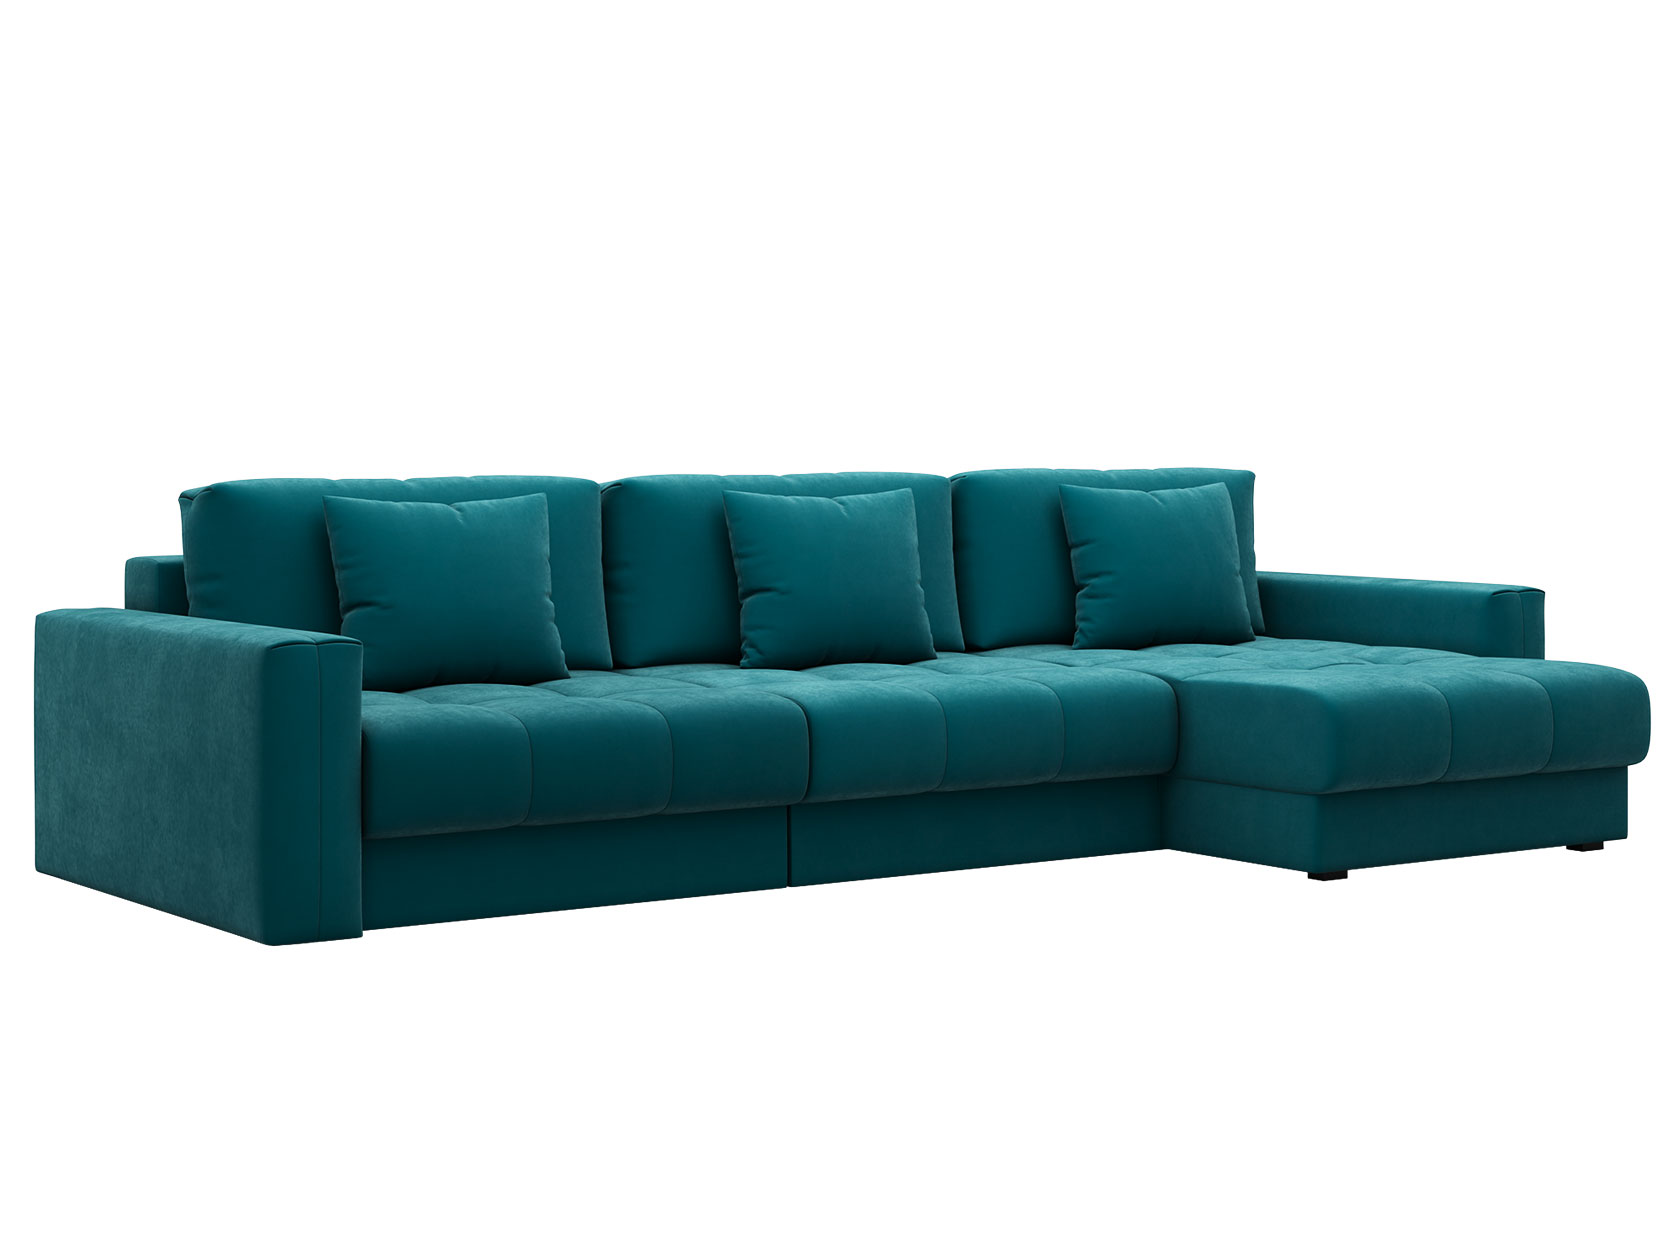 Угловой диван с оттоманкой Диван Клермон с оттоманкой Макси Клермон Макси фото 26